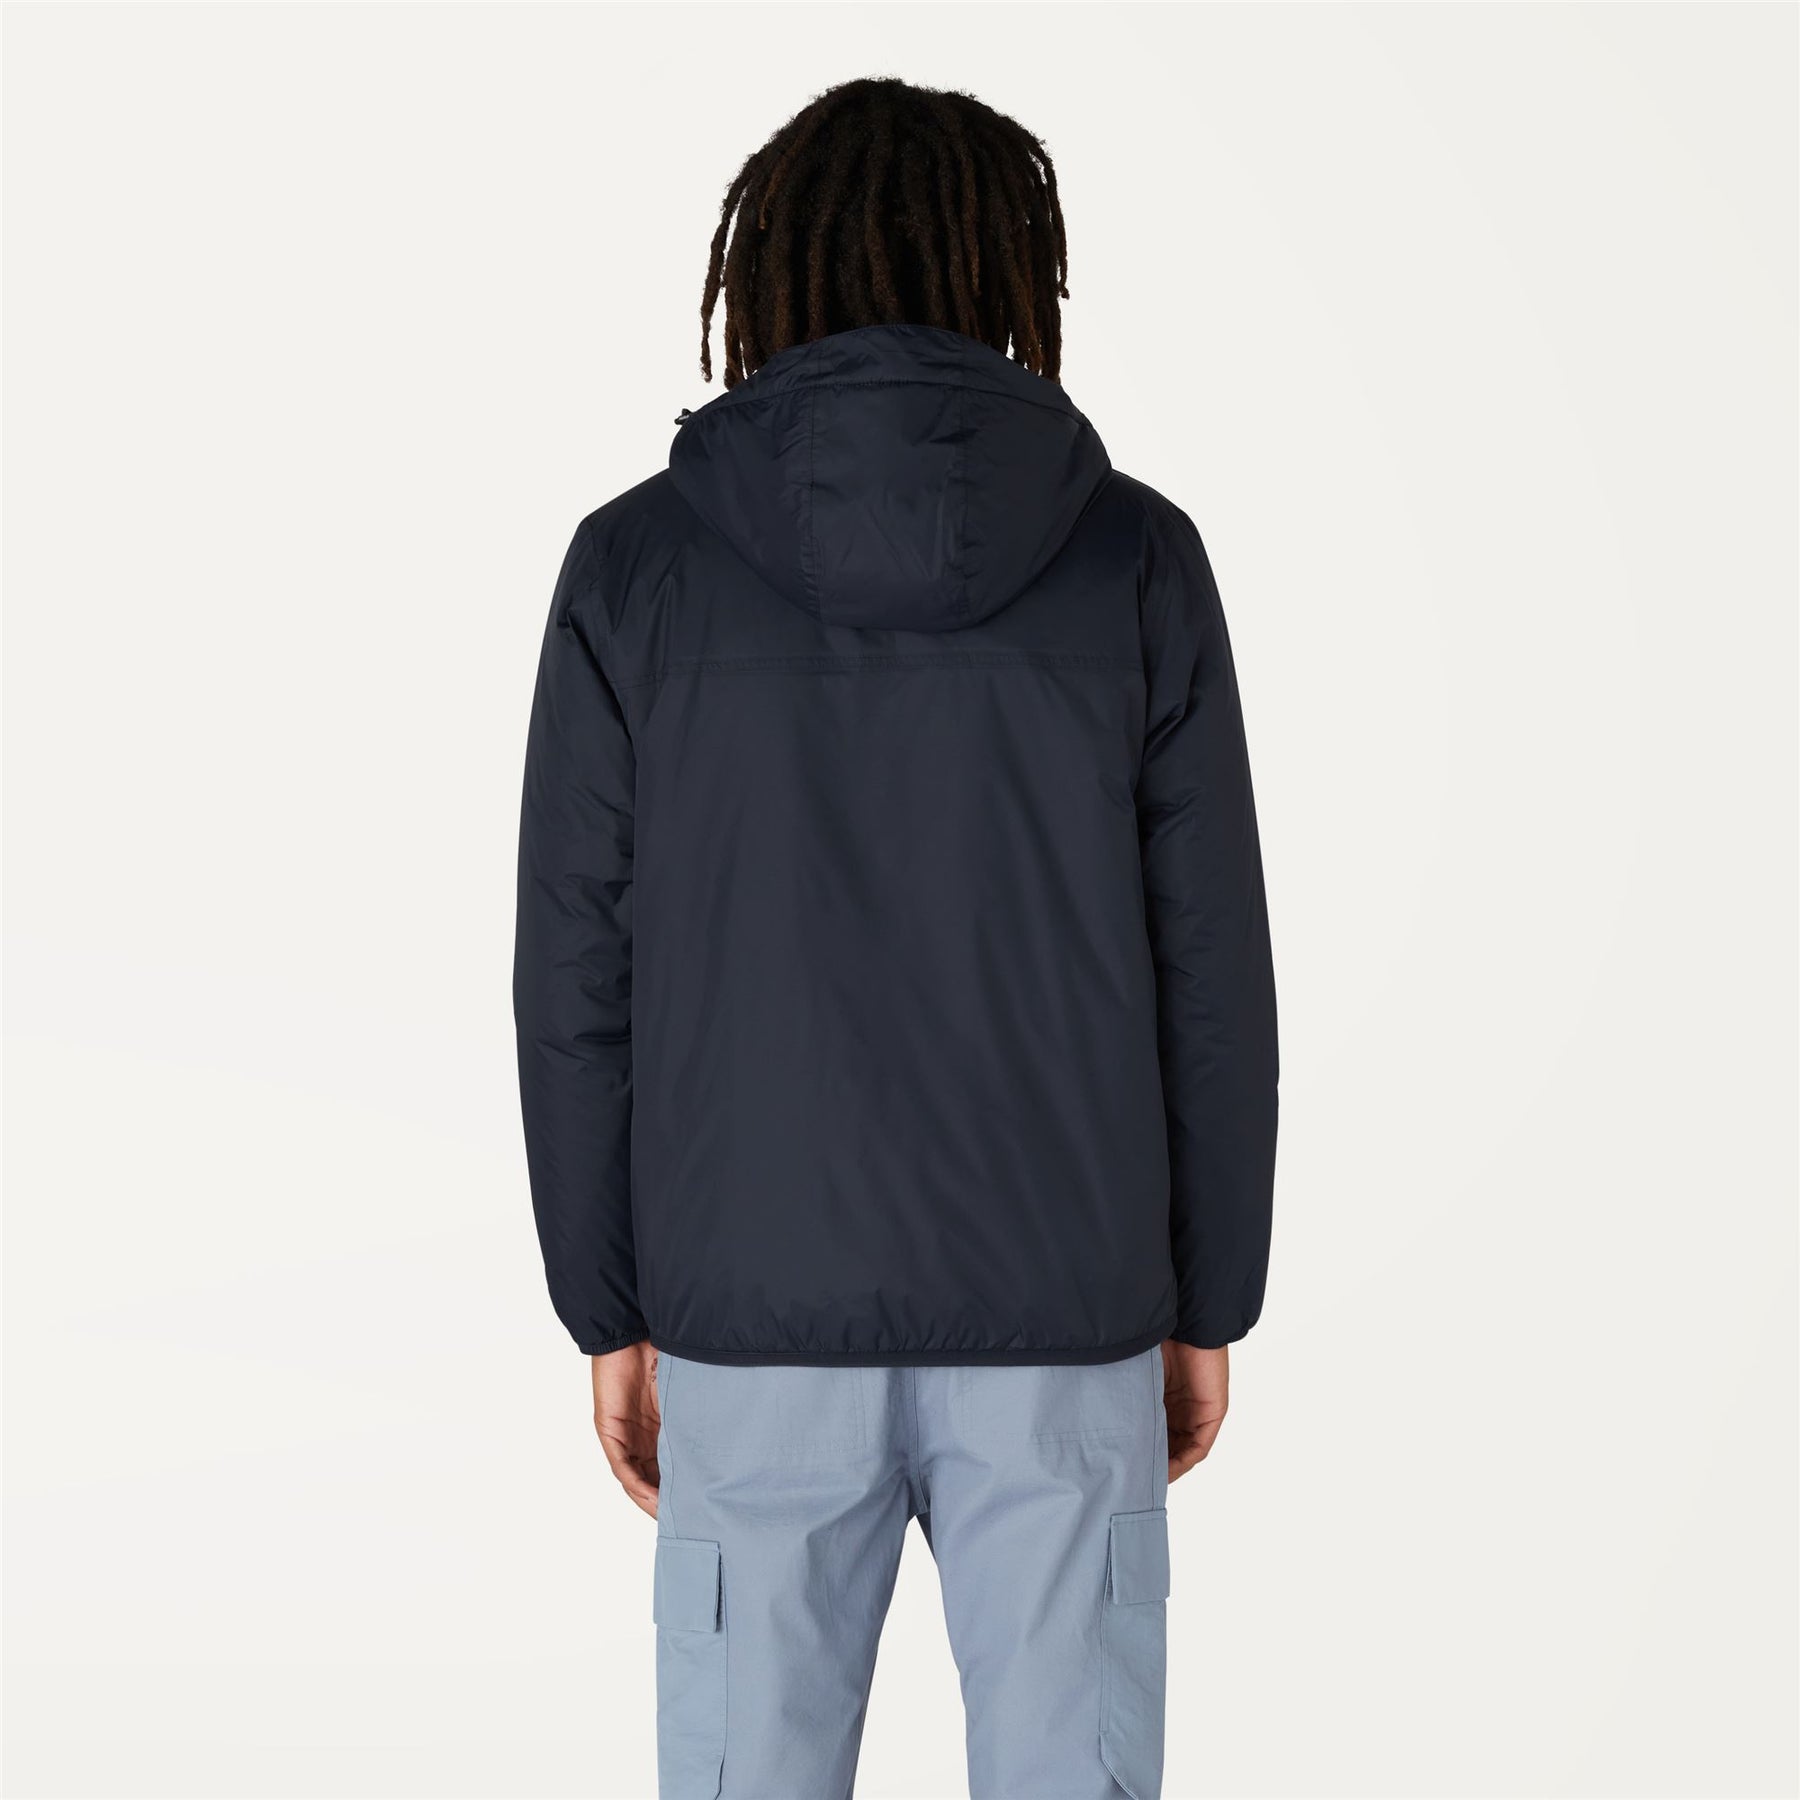 Claude Orsetto - Unisex Lined Full Zip Rain Jacket in Blue Depht